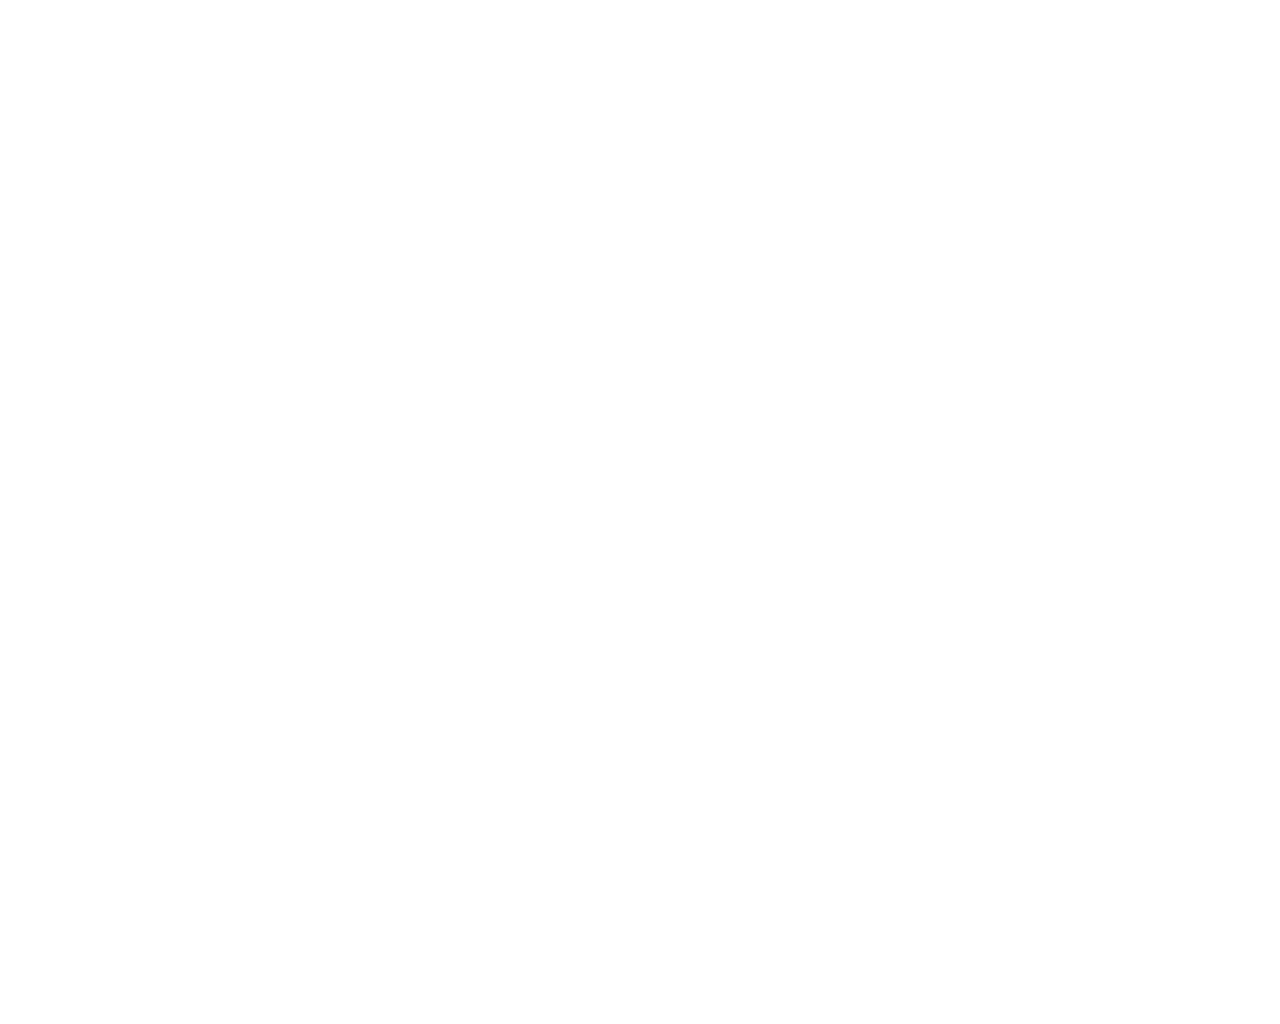 The Wedding Guys 716